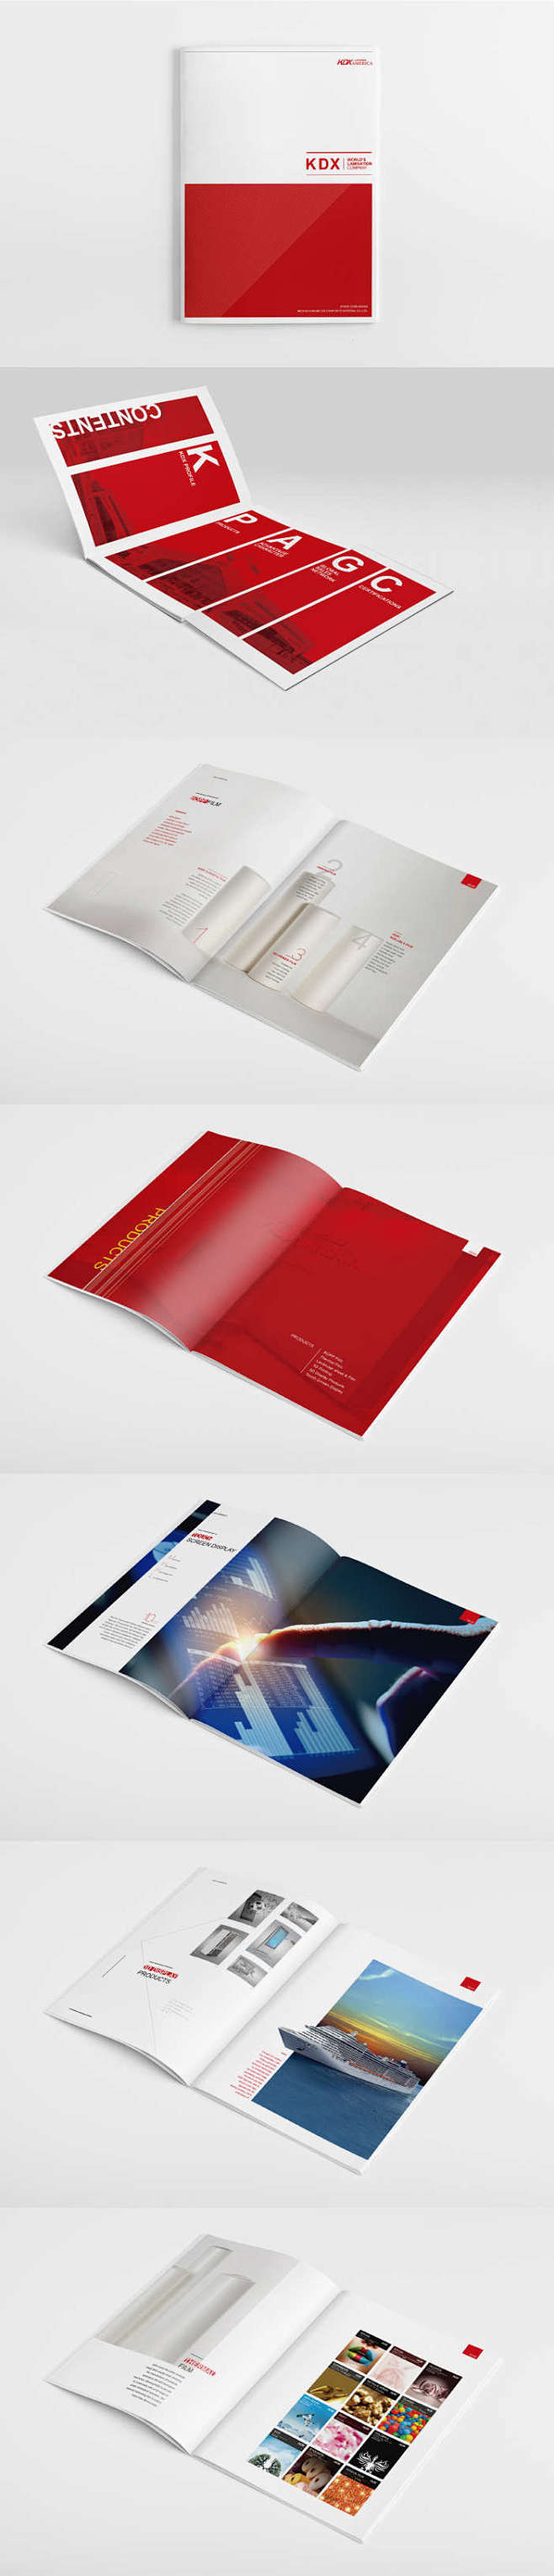 KDX 美国宣传册设计 - 视觉中国设计...